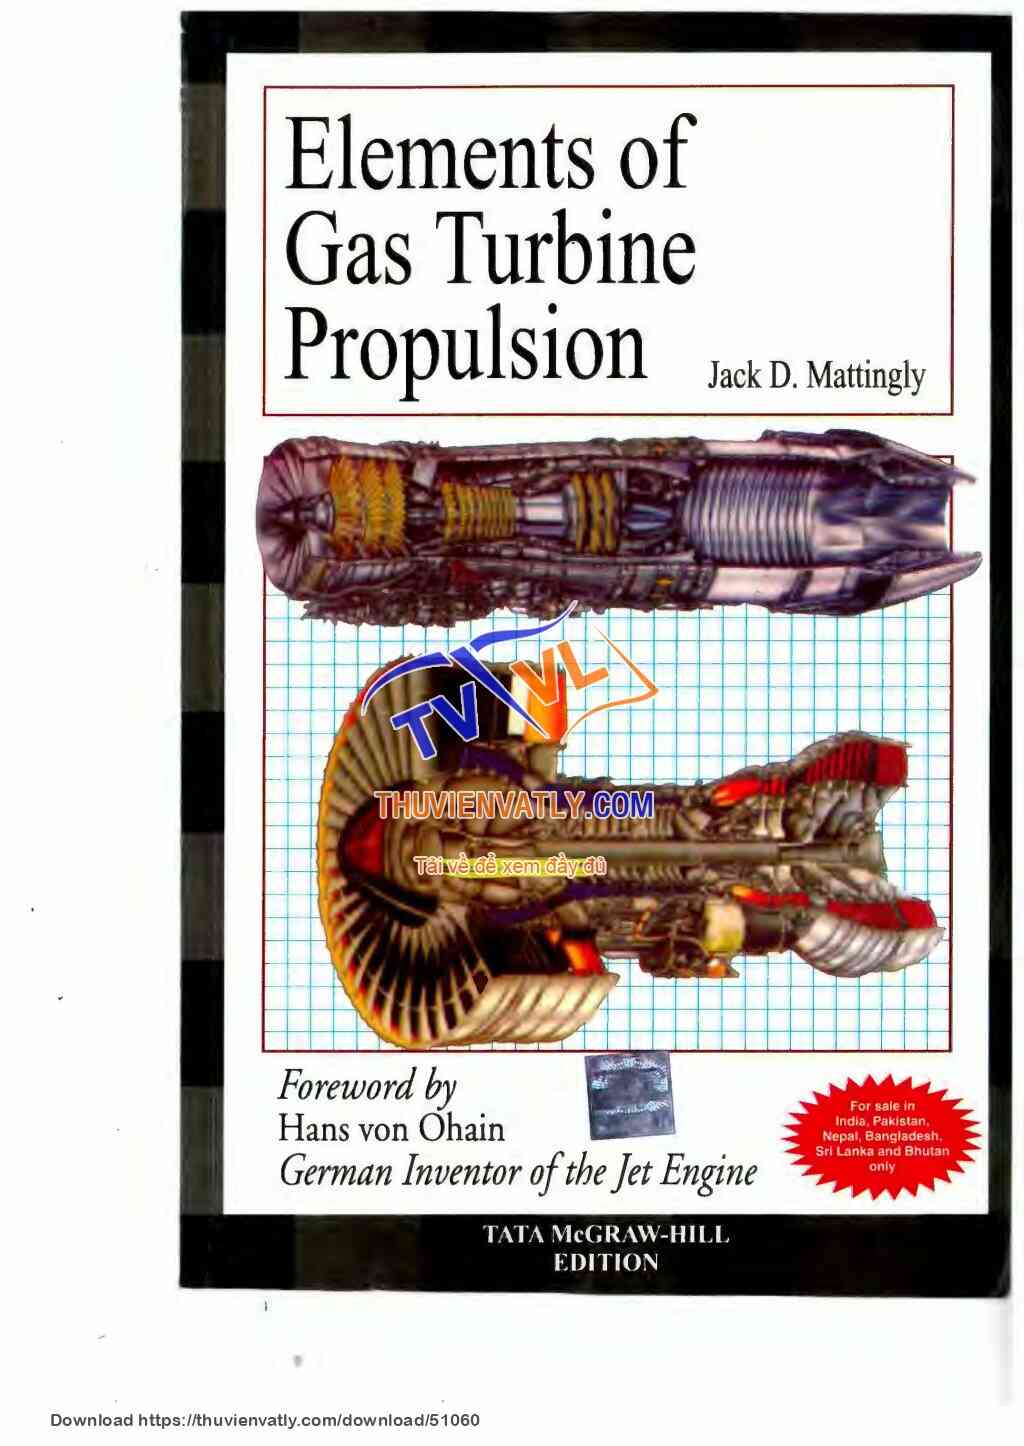 Element of gas turbine propulsion